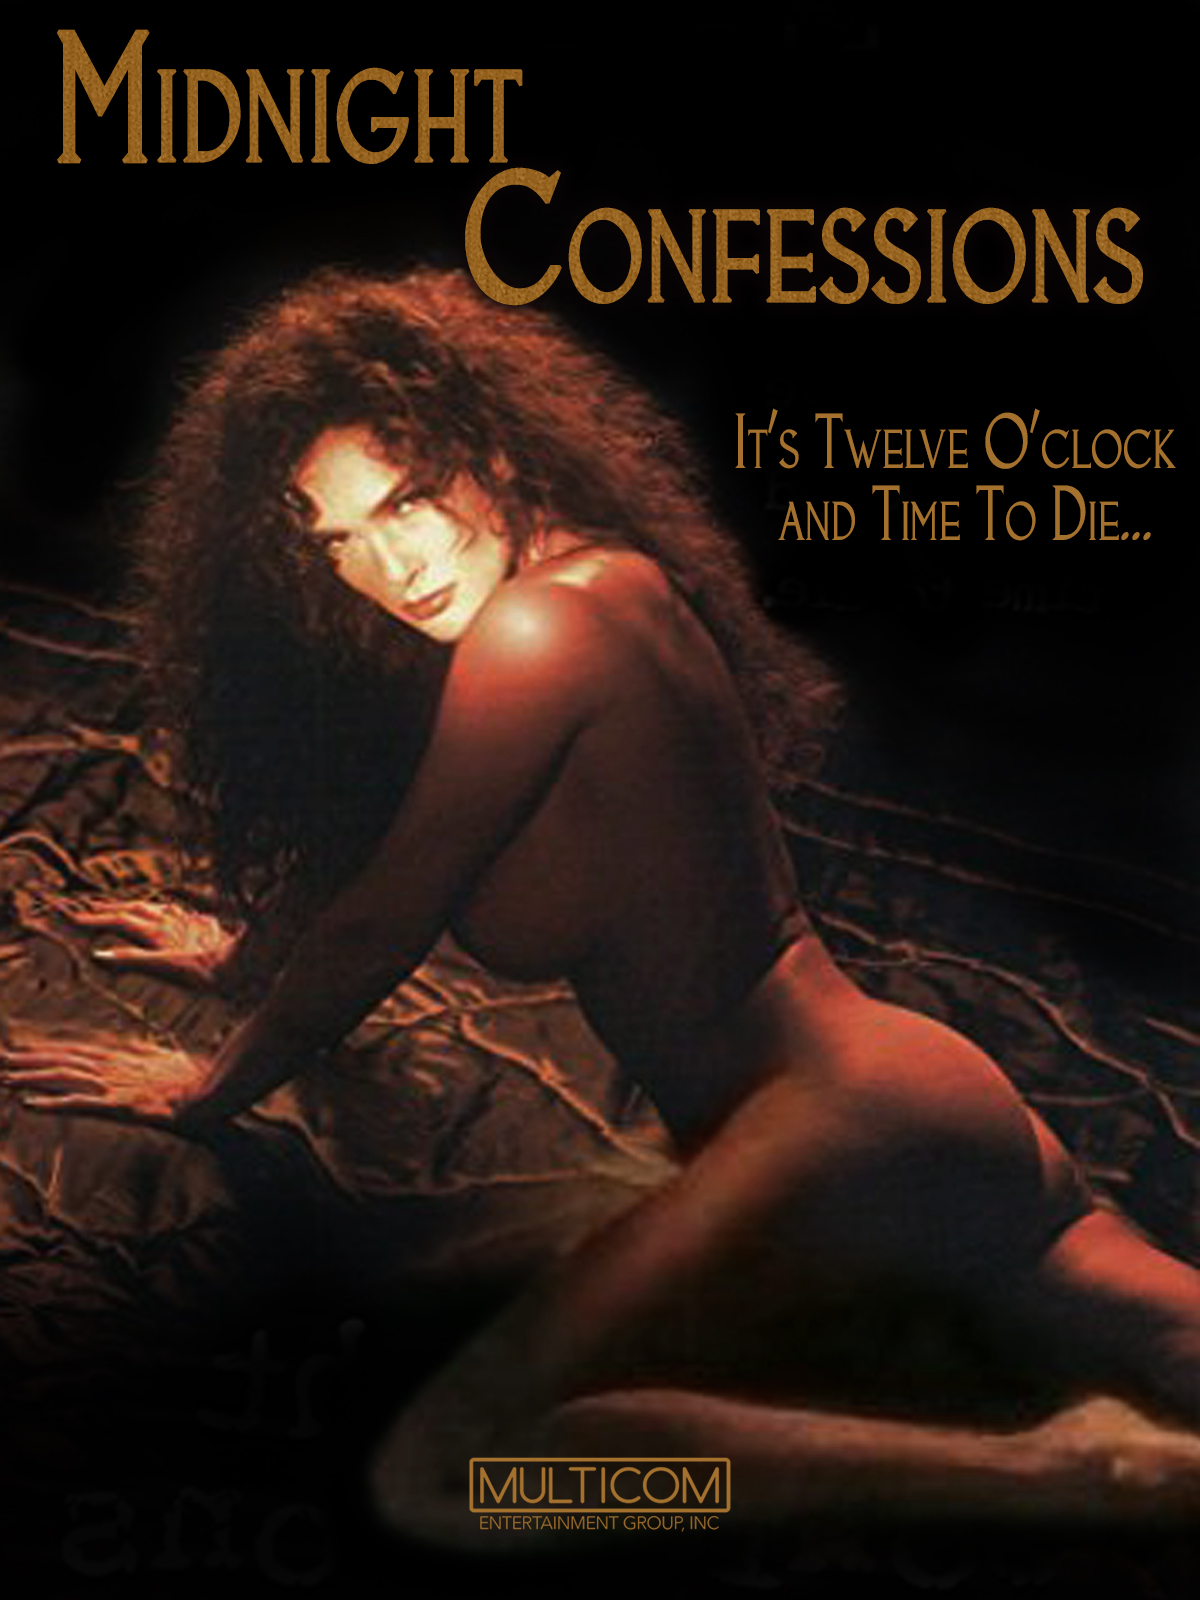 Midnight Confessions (1994) Screenshot 2